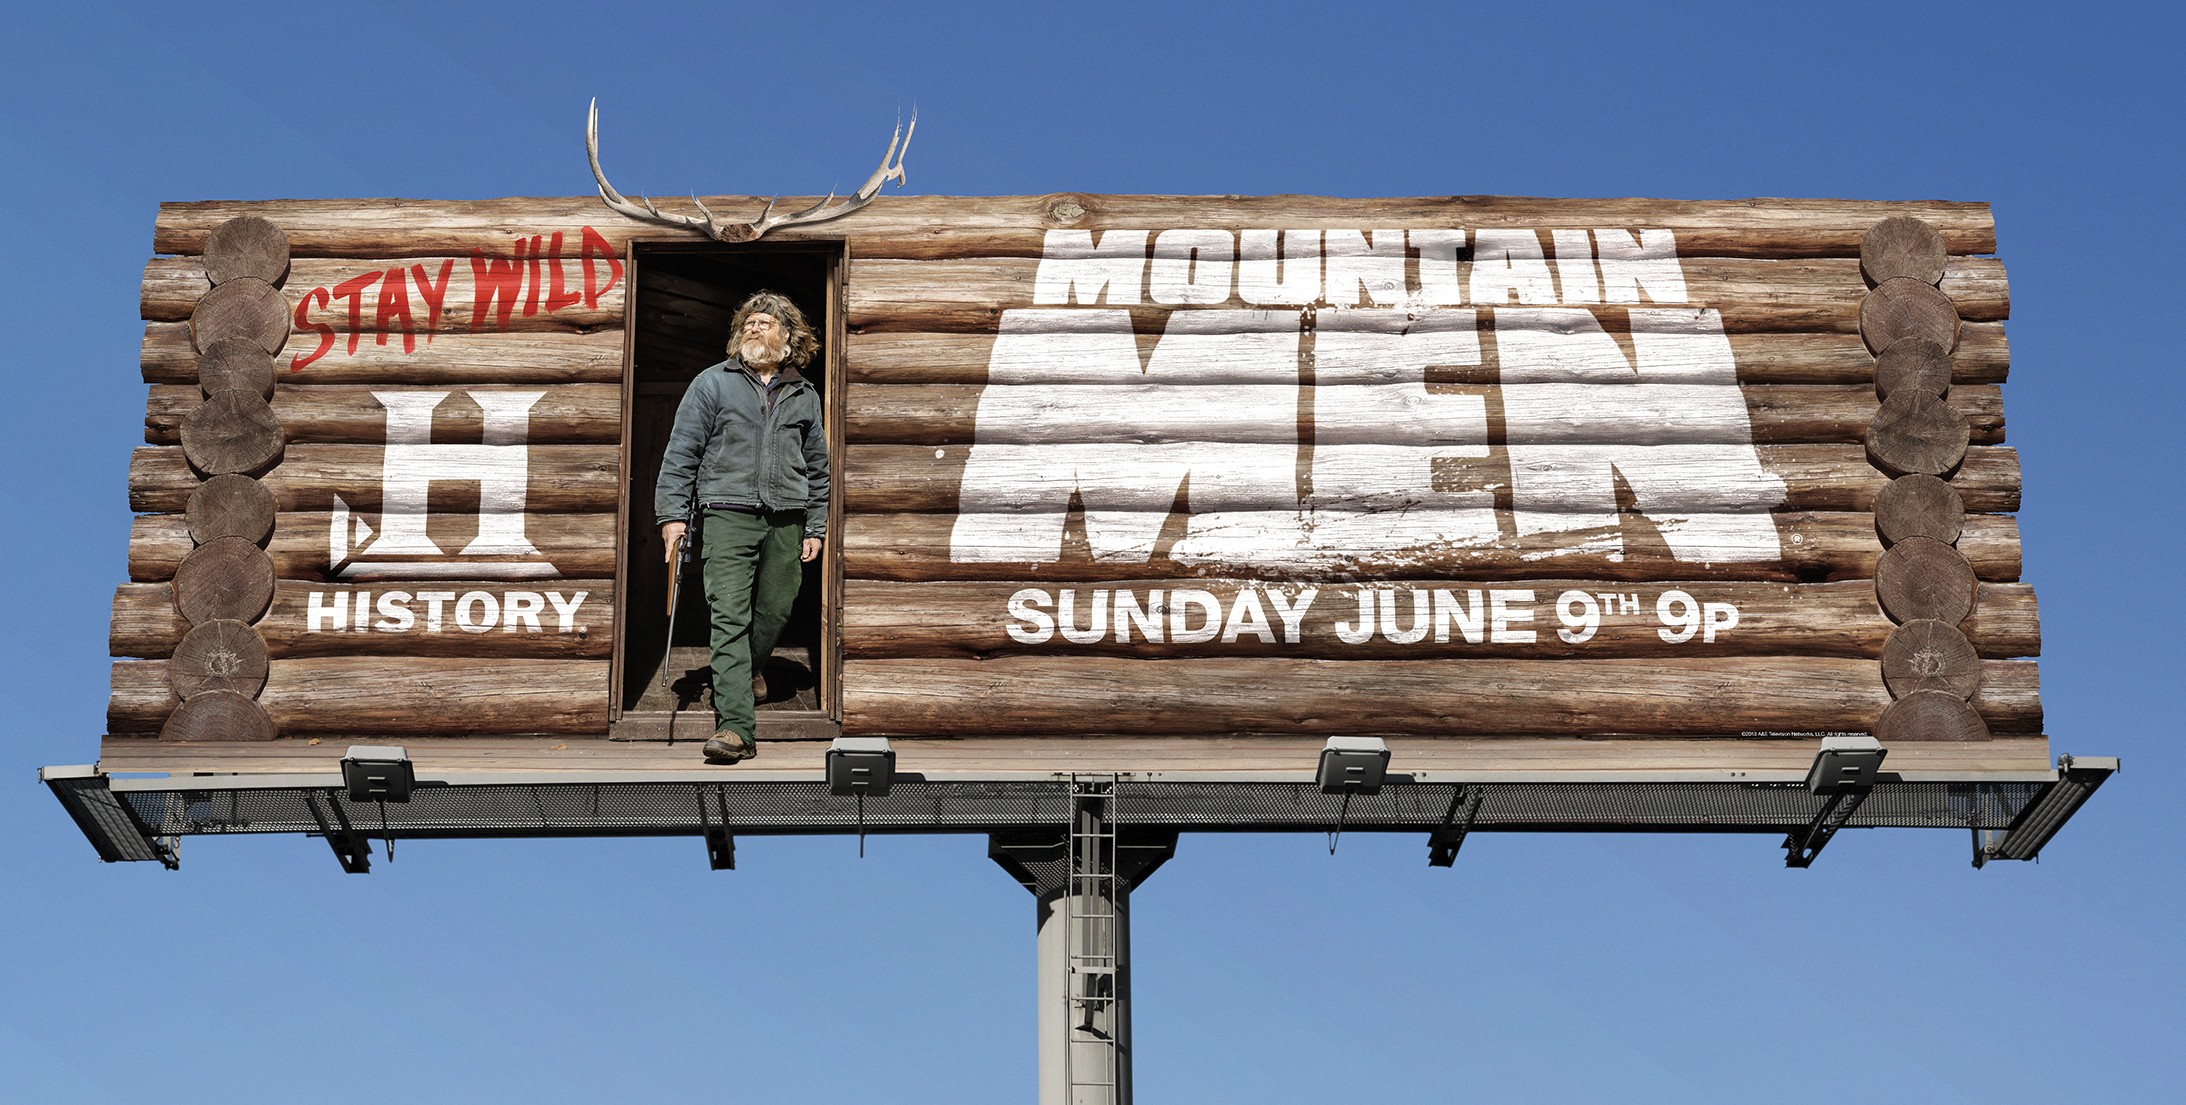 Mega Sized TV Poster Image for Mountain Men (#5 of 12)